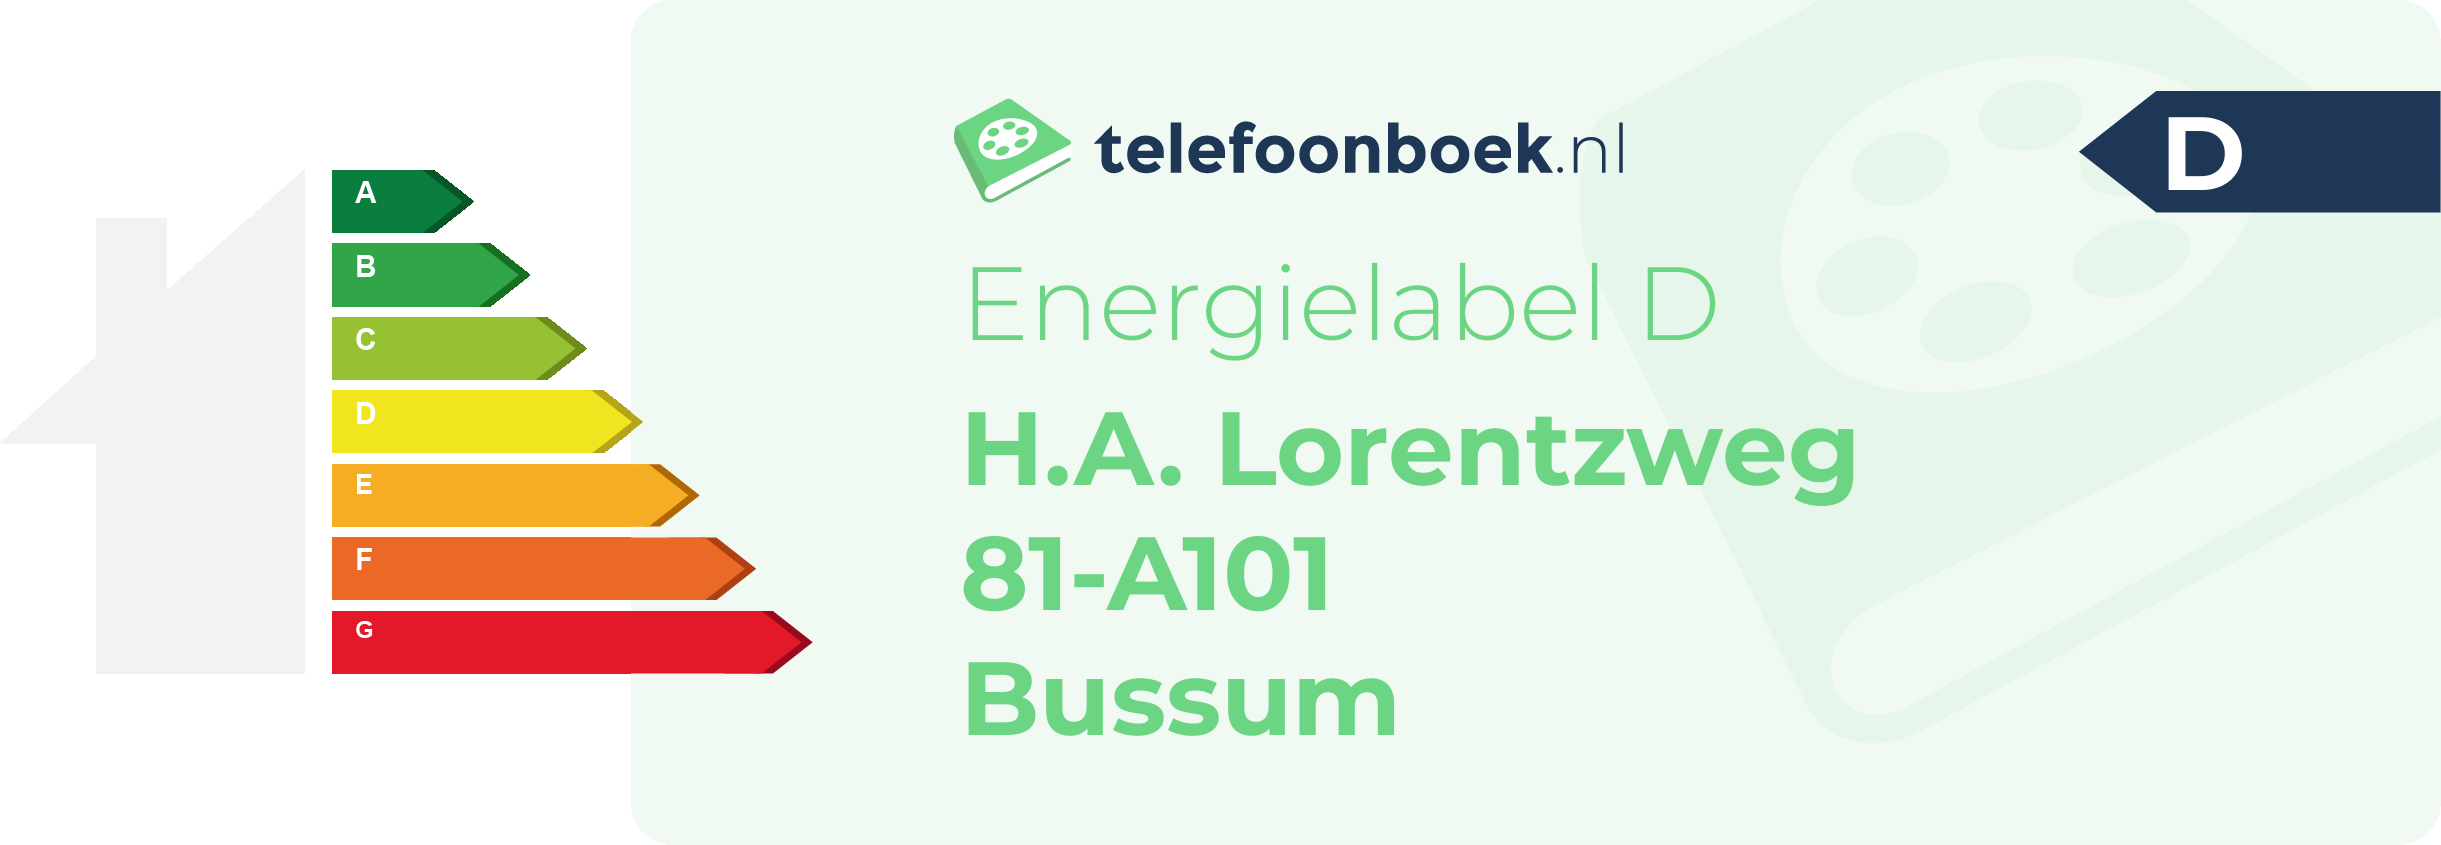 Energielabel H.A. Lorentzweg 81-A101 Bussum